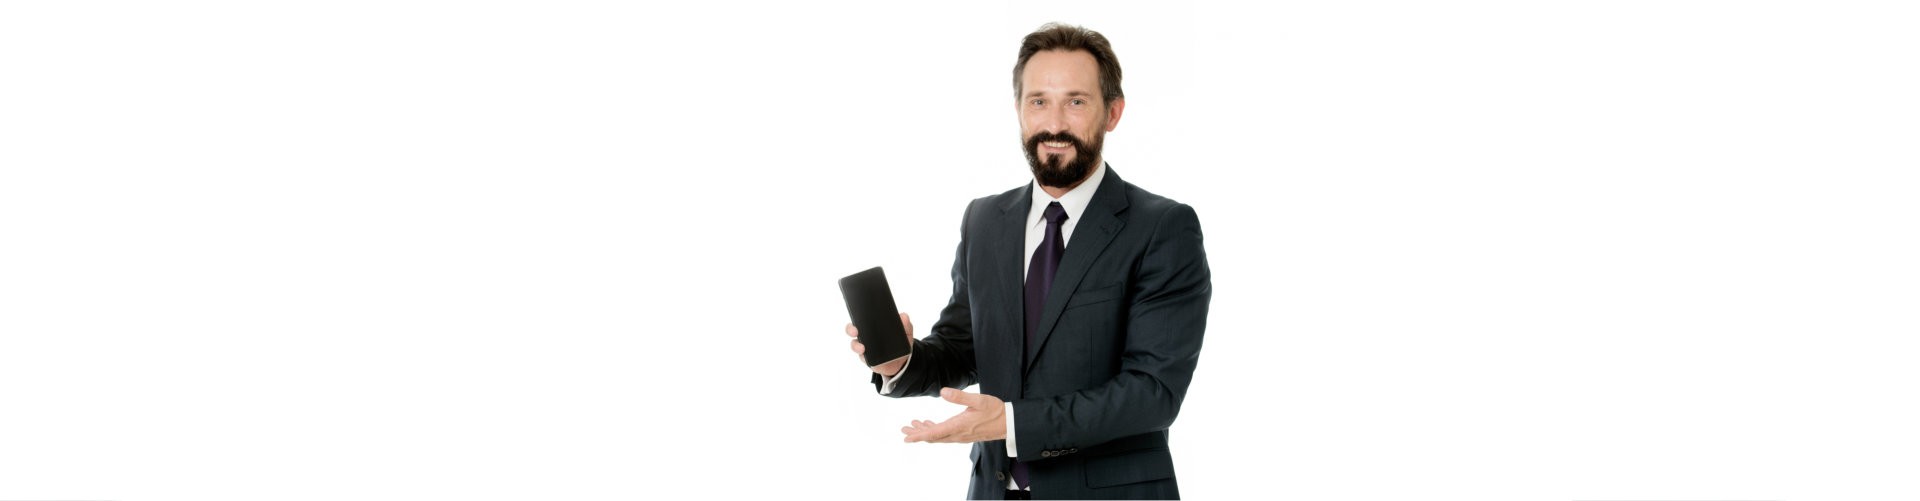 man holding smart phone